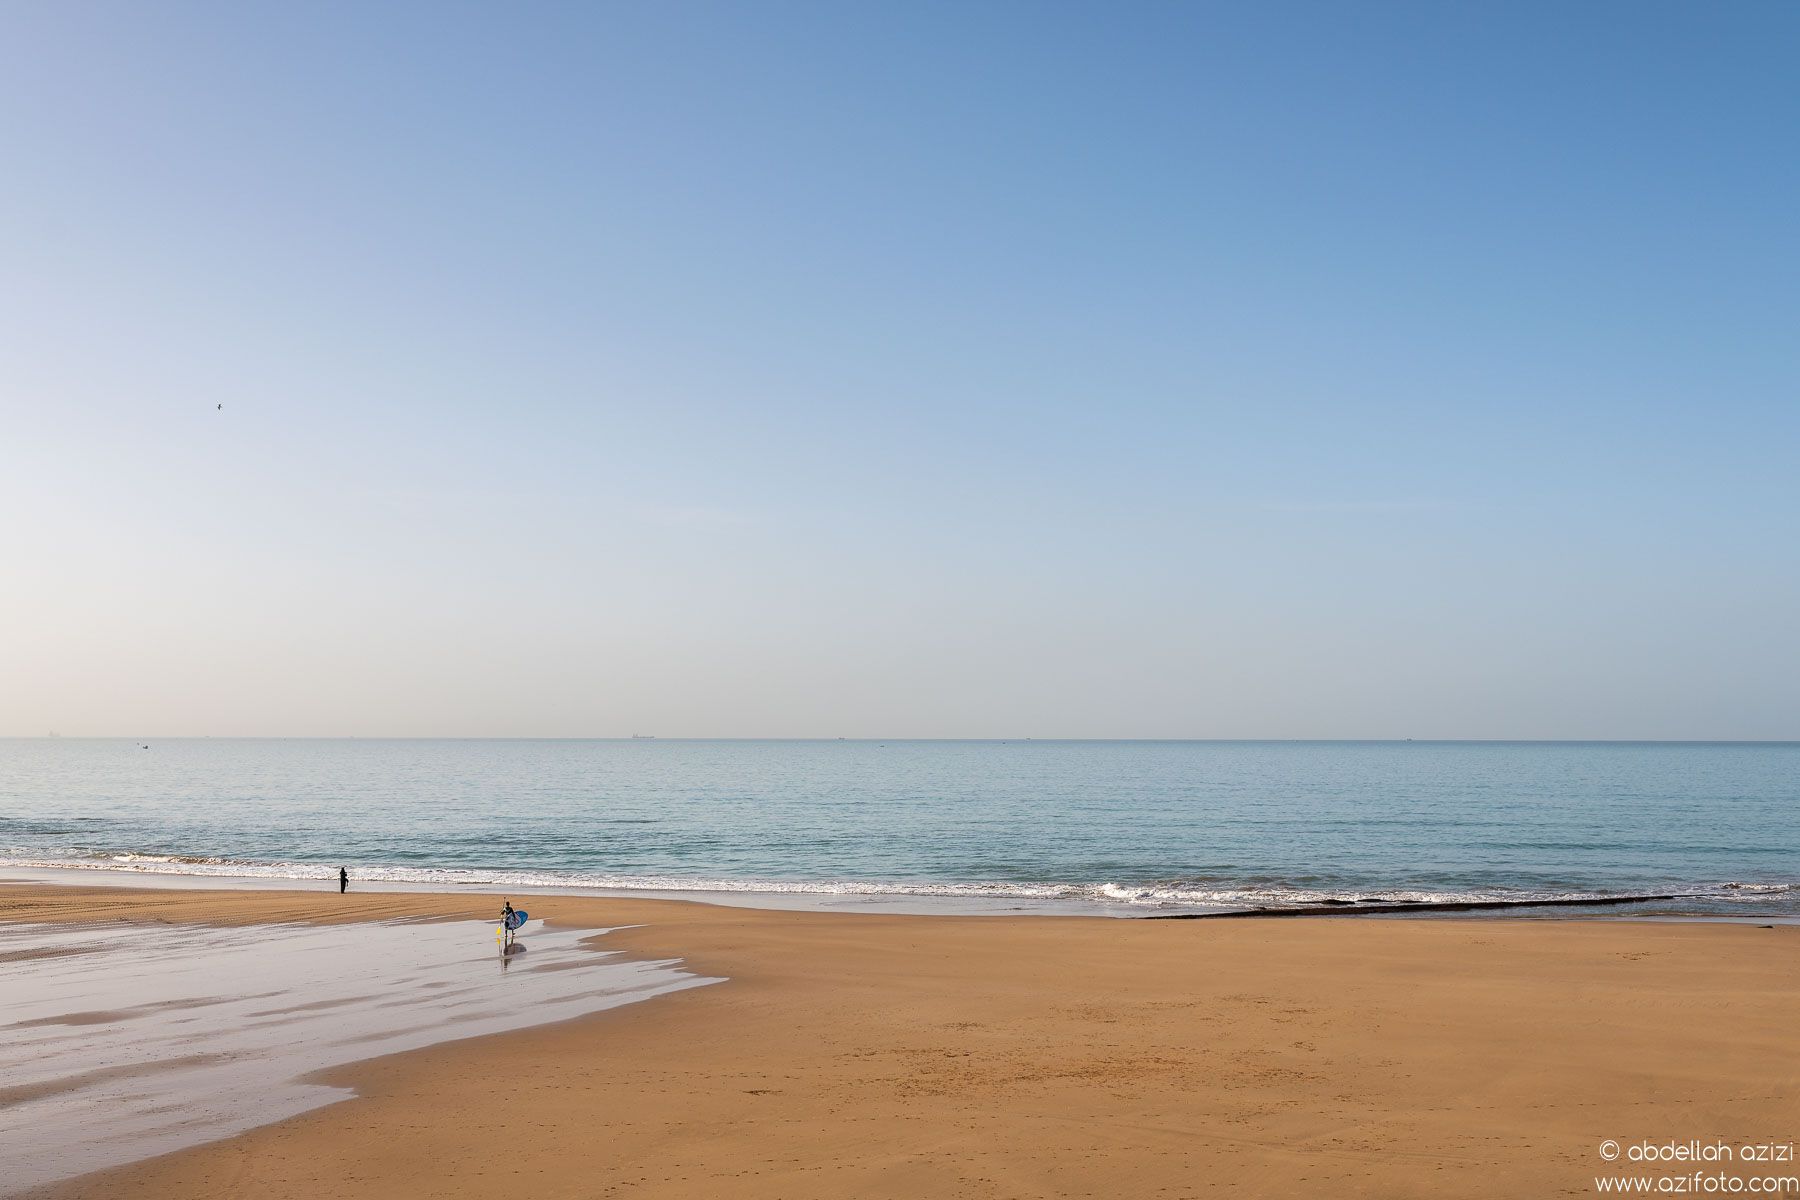 Taghazout beach, Morocco